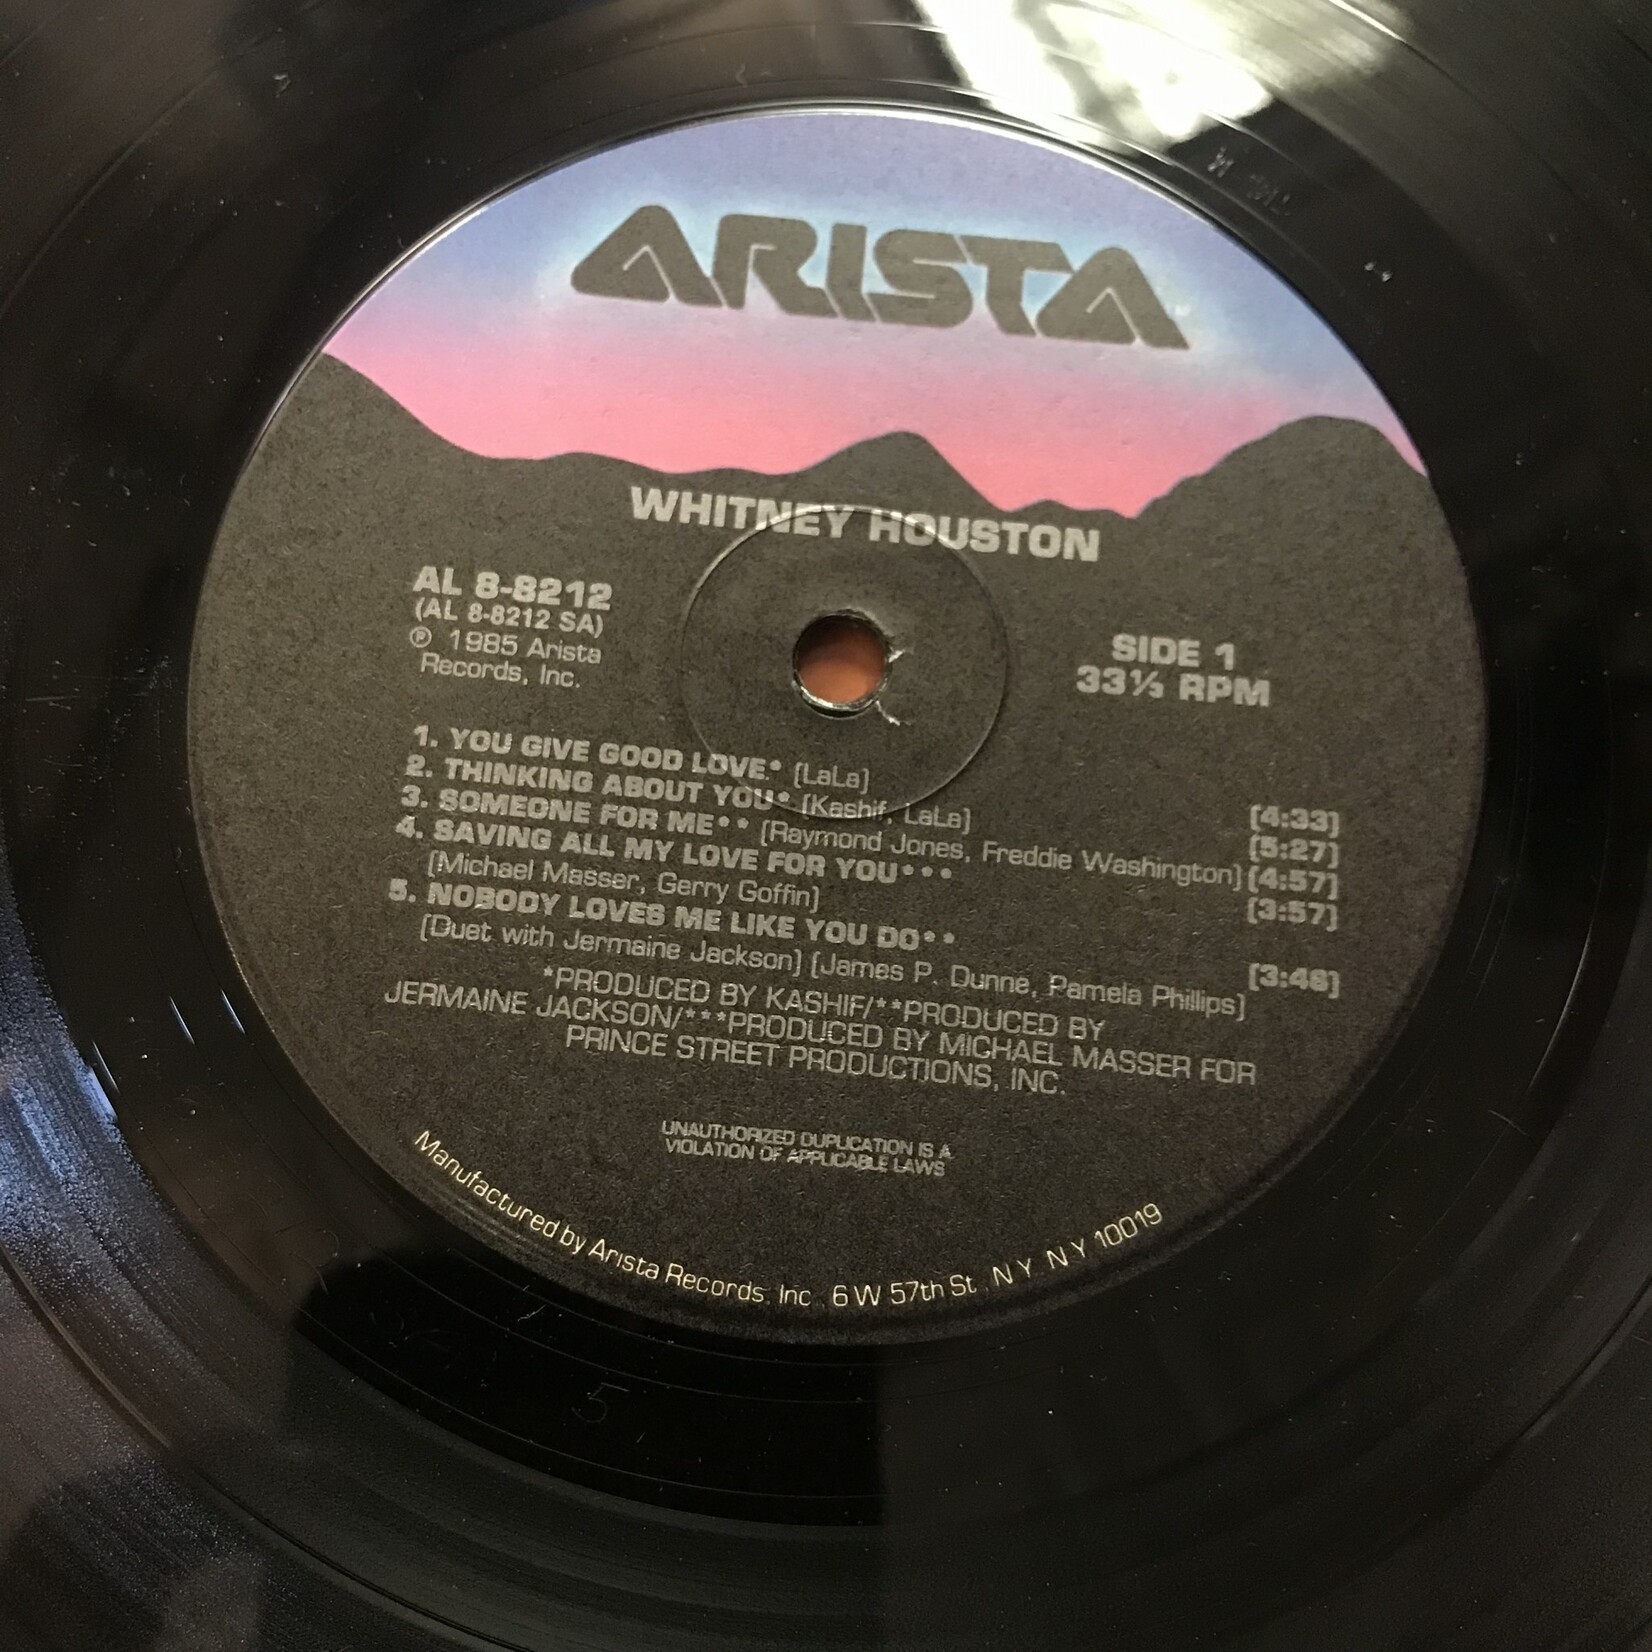 Whitney Houston - Whitney Houston - AL8 8212 - Vinyl LP (USED)